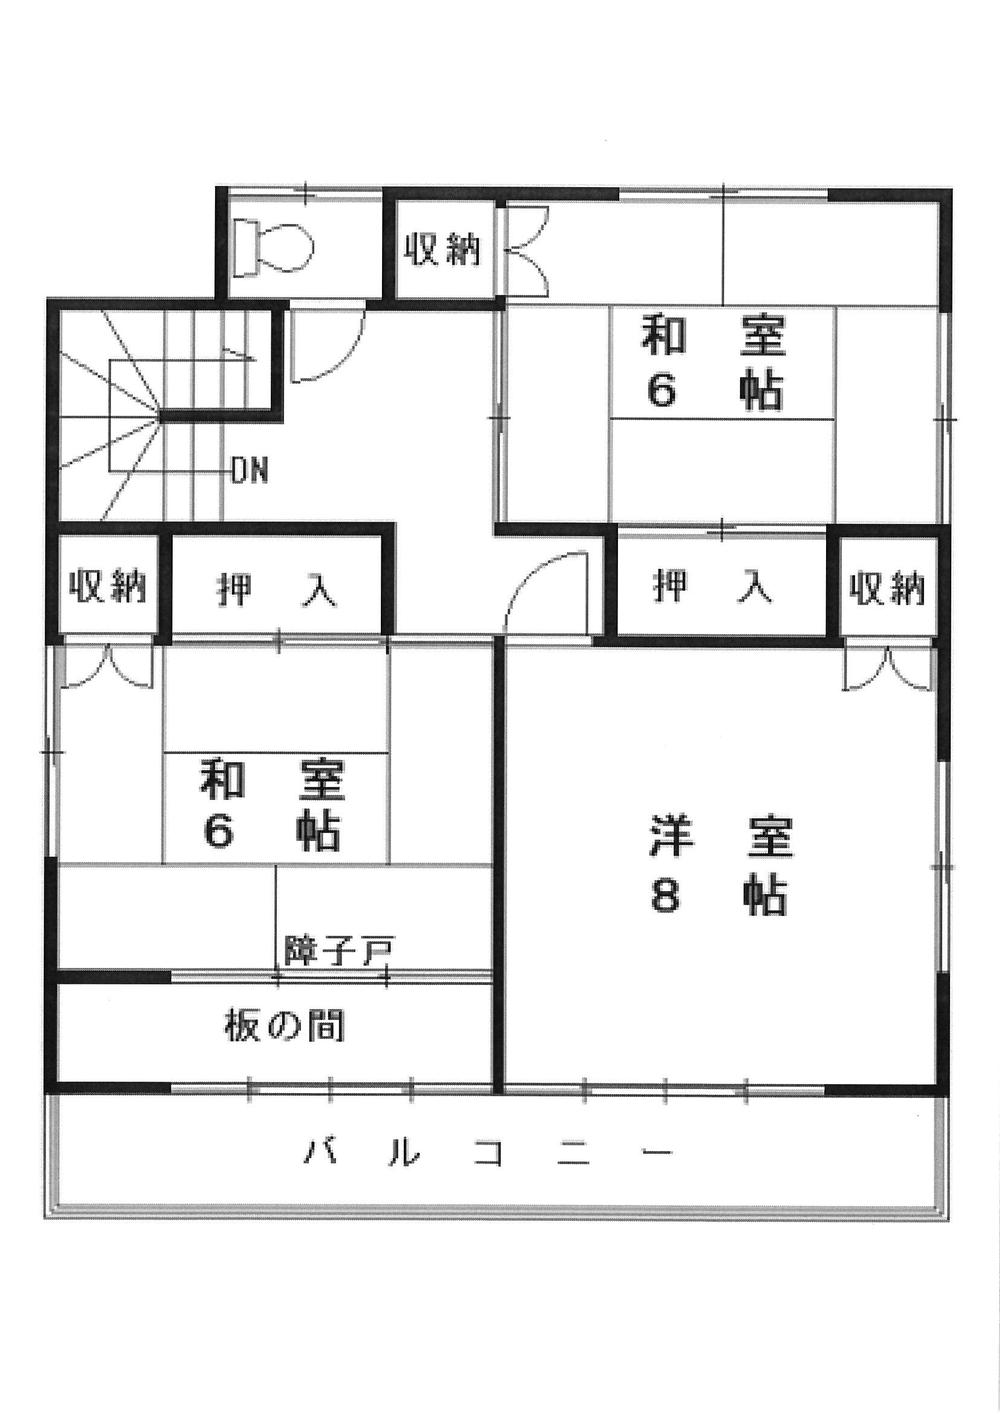 Floor plan. 35,800,000 yen, 4LDK, Land area 141.53 sq m , Building area 106.58 sq m